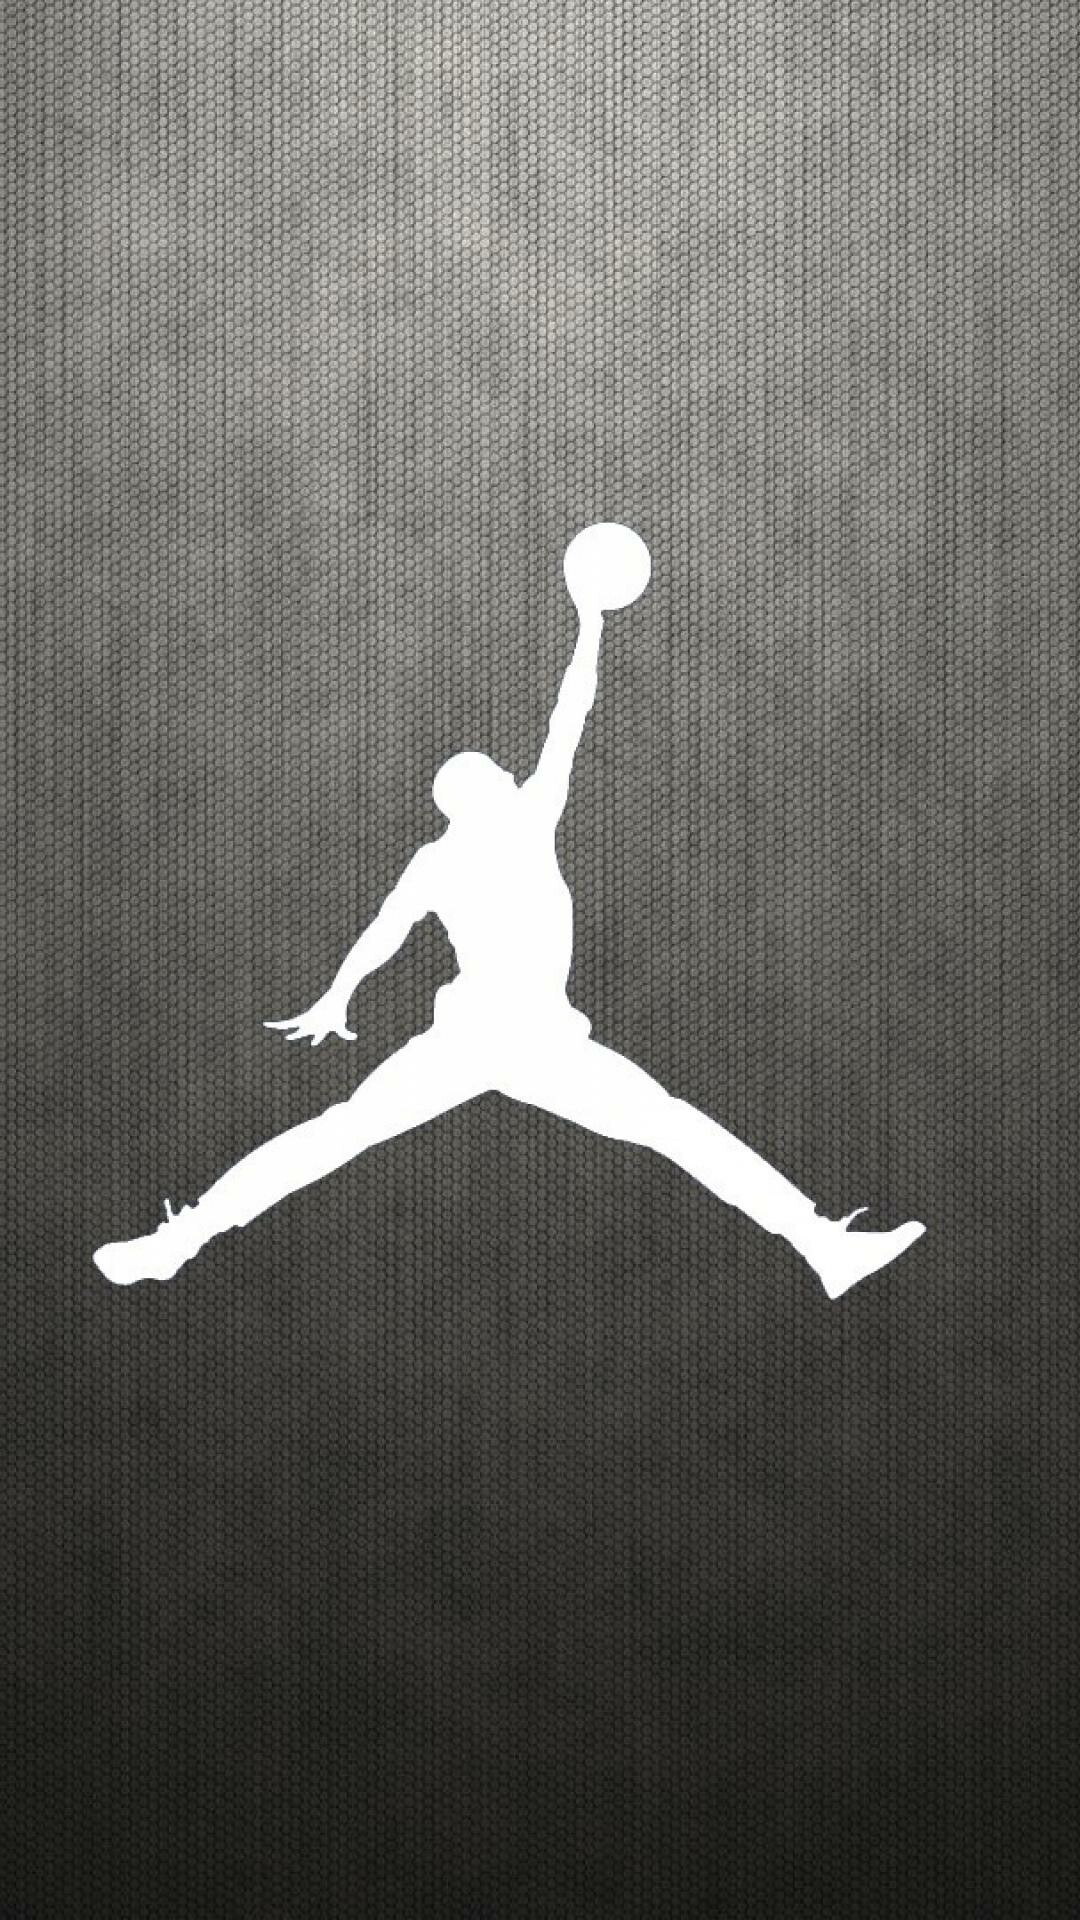 Michael Jordan: Tied Wilt Chamberlain's record of seven consecutive NBA scoring titles. 1080x1920 Full HD Wallpaper.